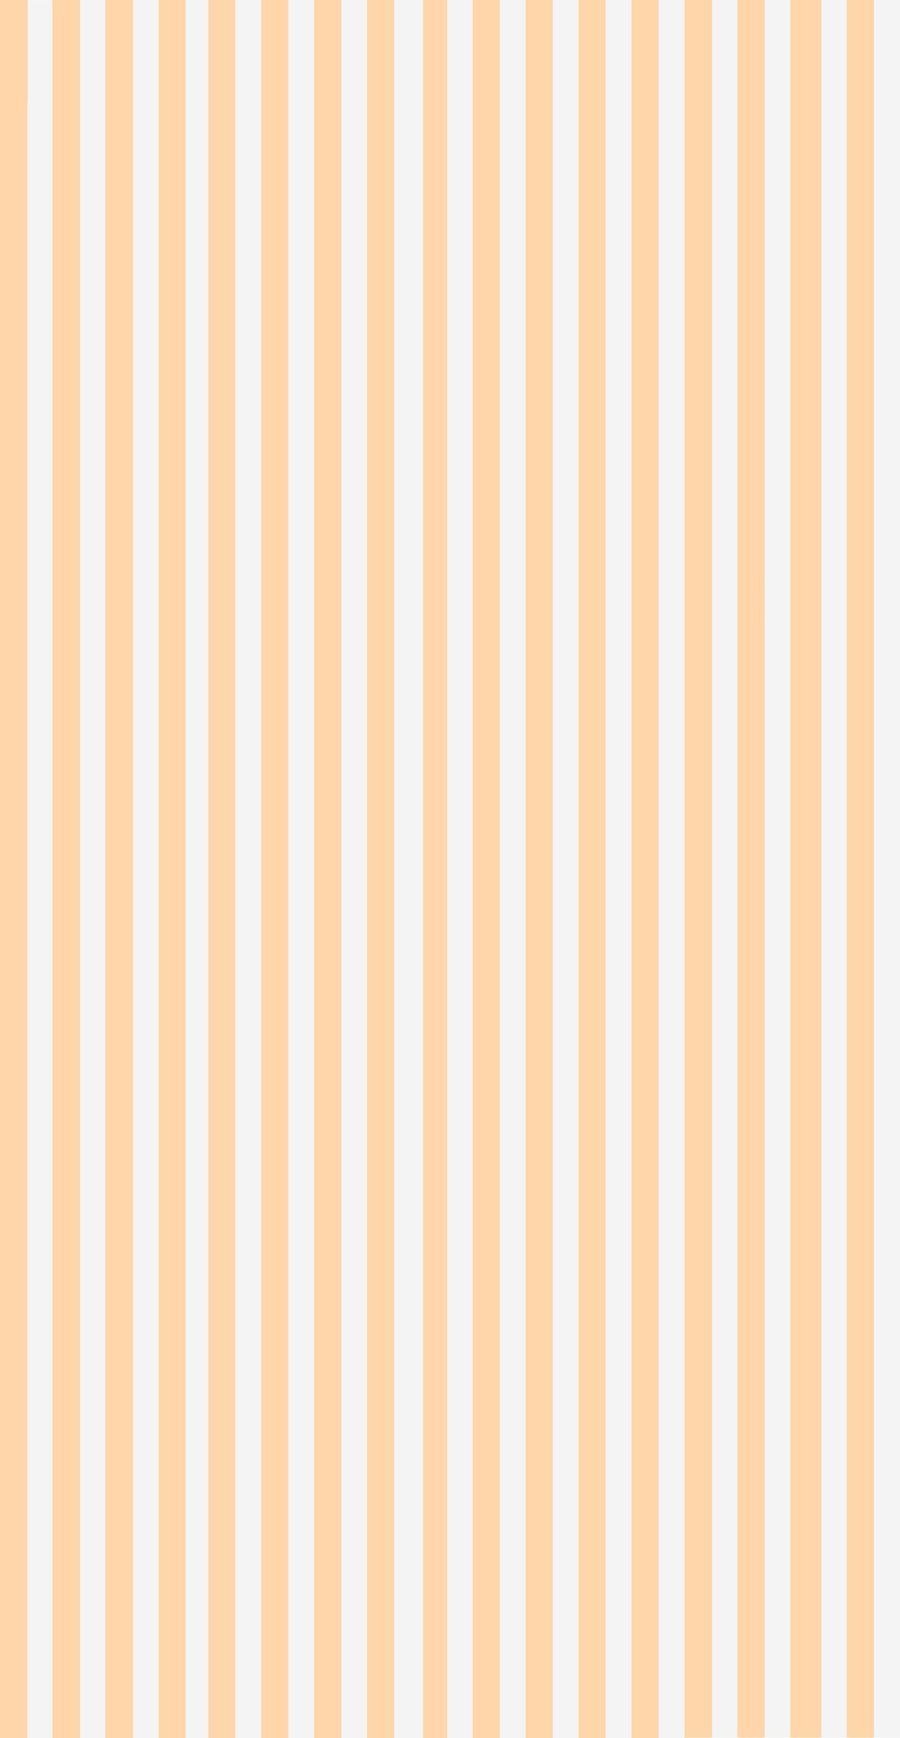 A striped wallpaper with orange and white stripes - Pastel orange